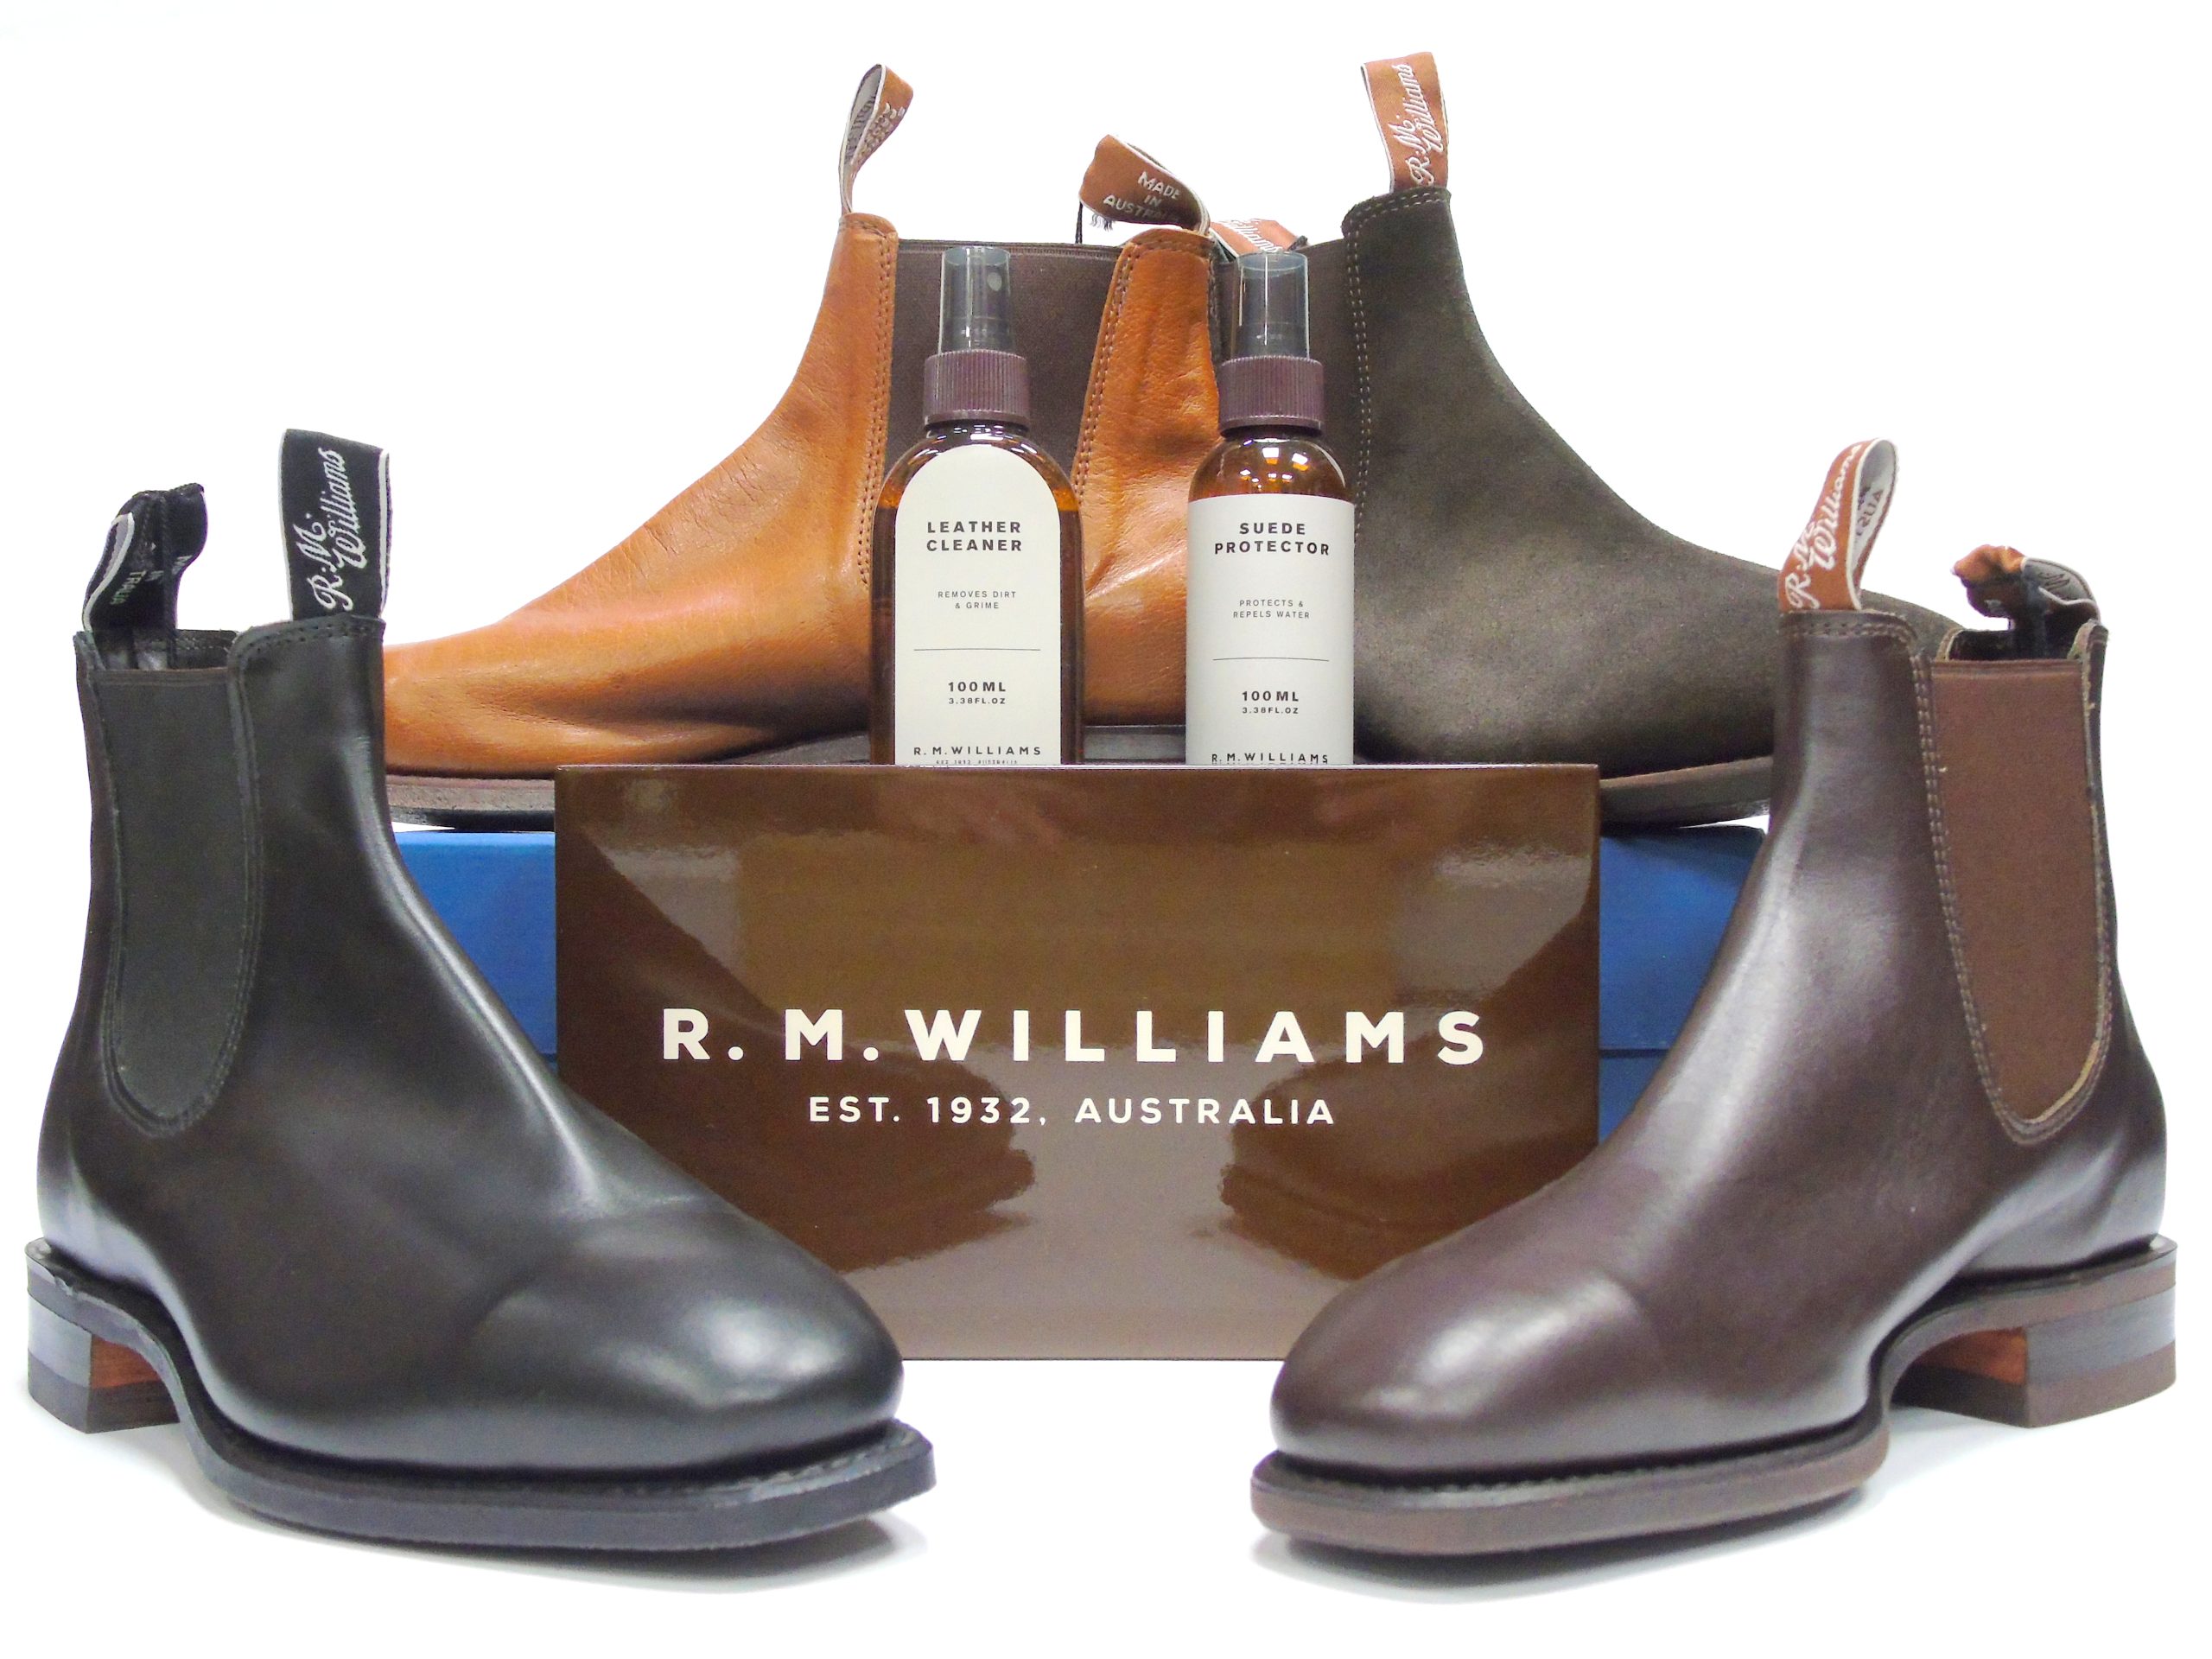 R.M. Williams - Mini Longhorn Cap, Grey - County Clothes